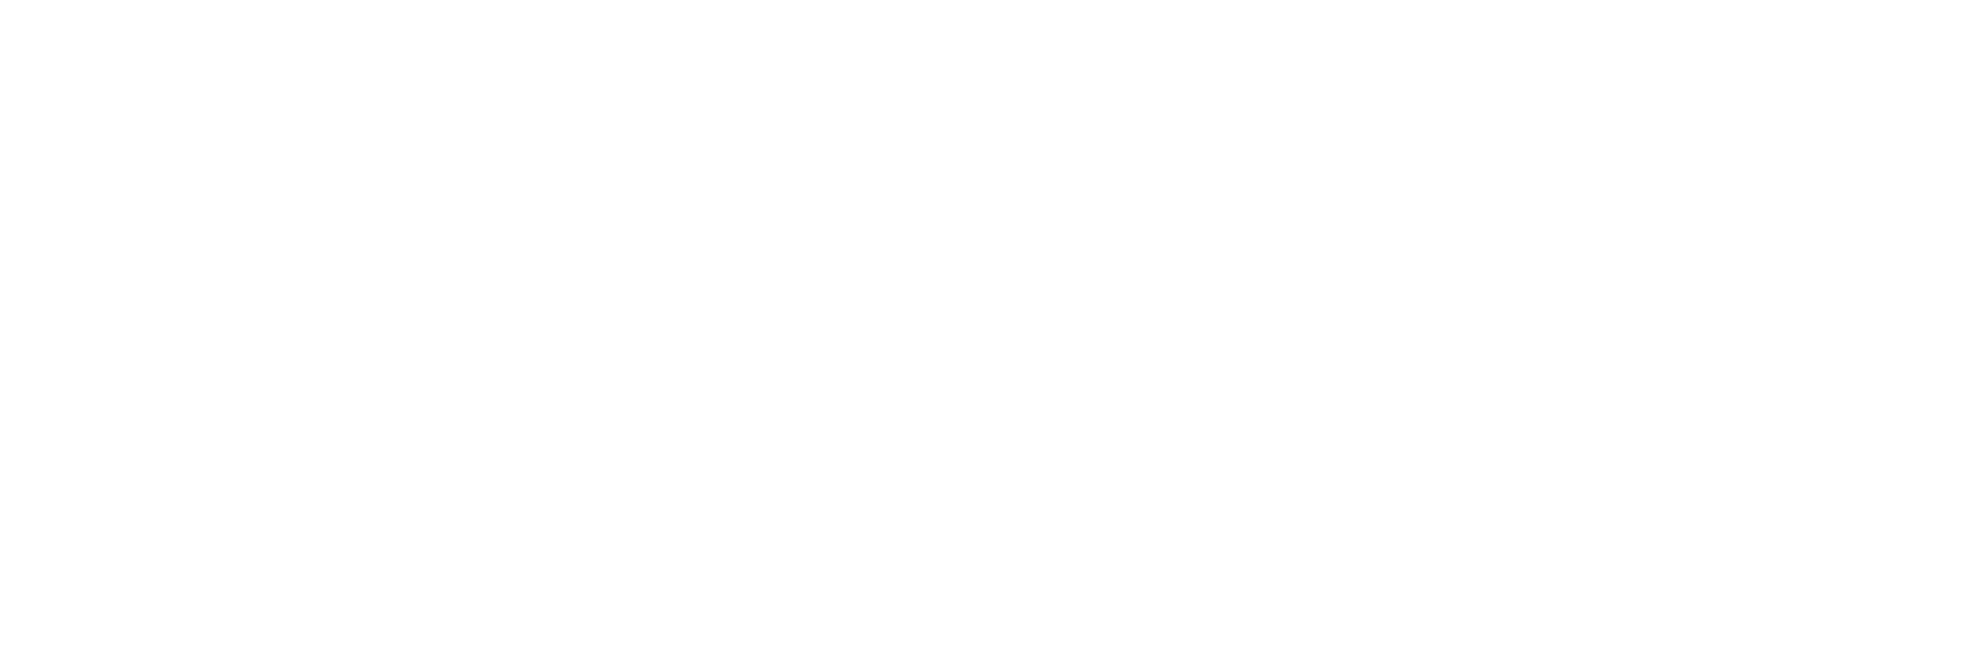 BSI-Footer-Certification